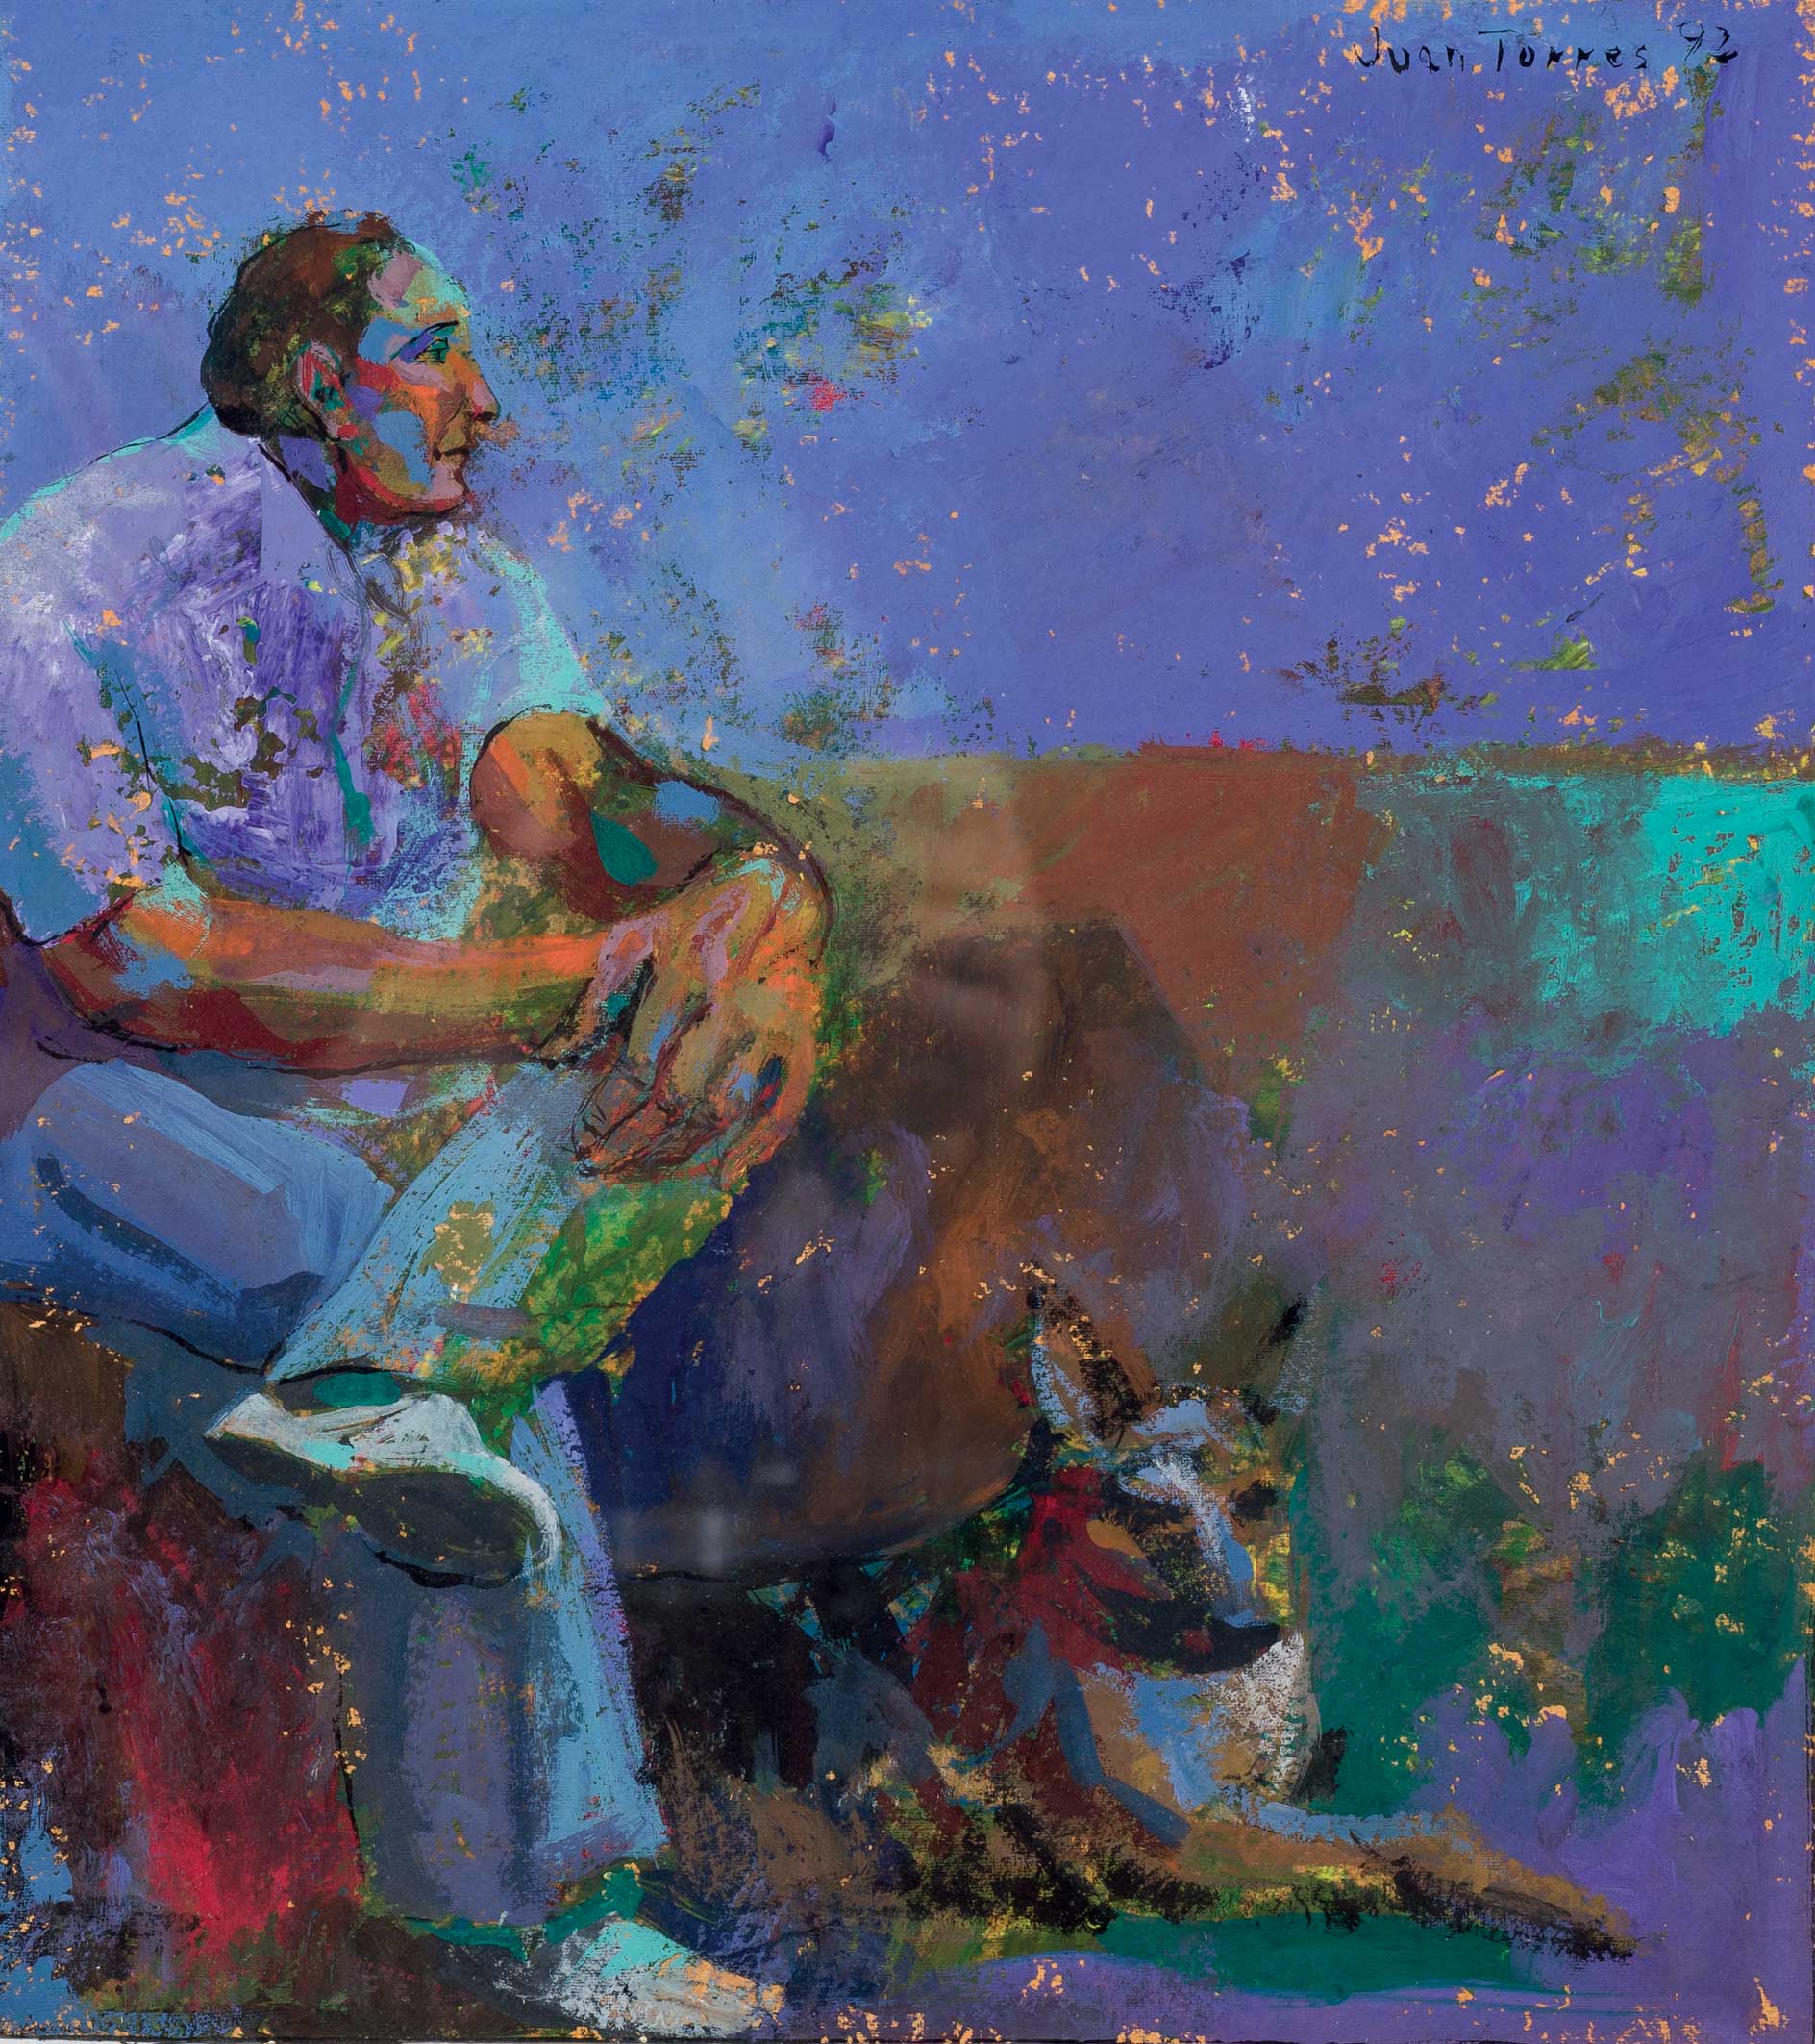 JUAN TORRES "Hombre y perro". Goauche sobre papel. 33 x 29 cm. Firmado Juan Torres 92 en el ángulo